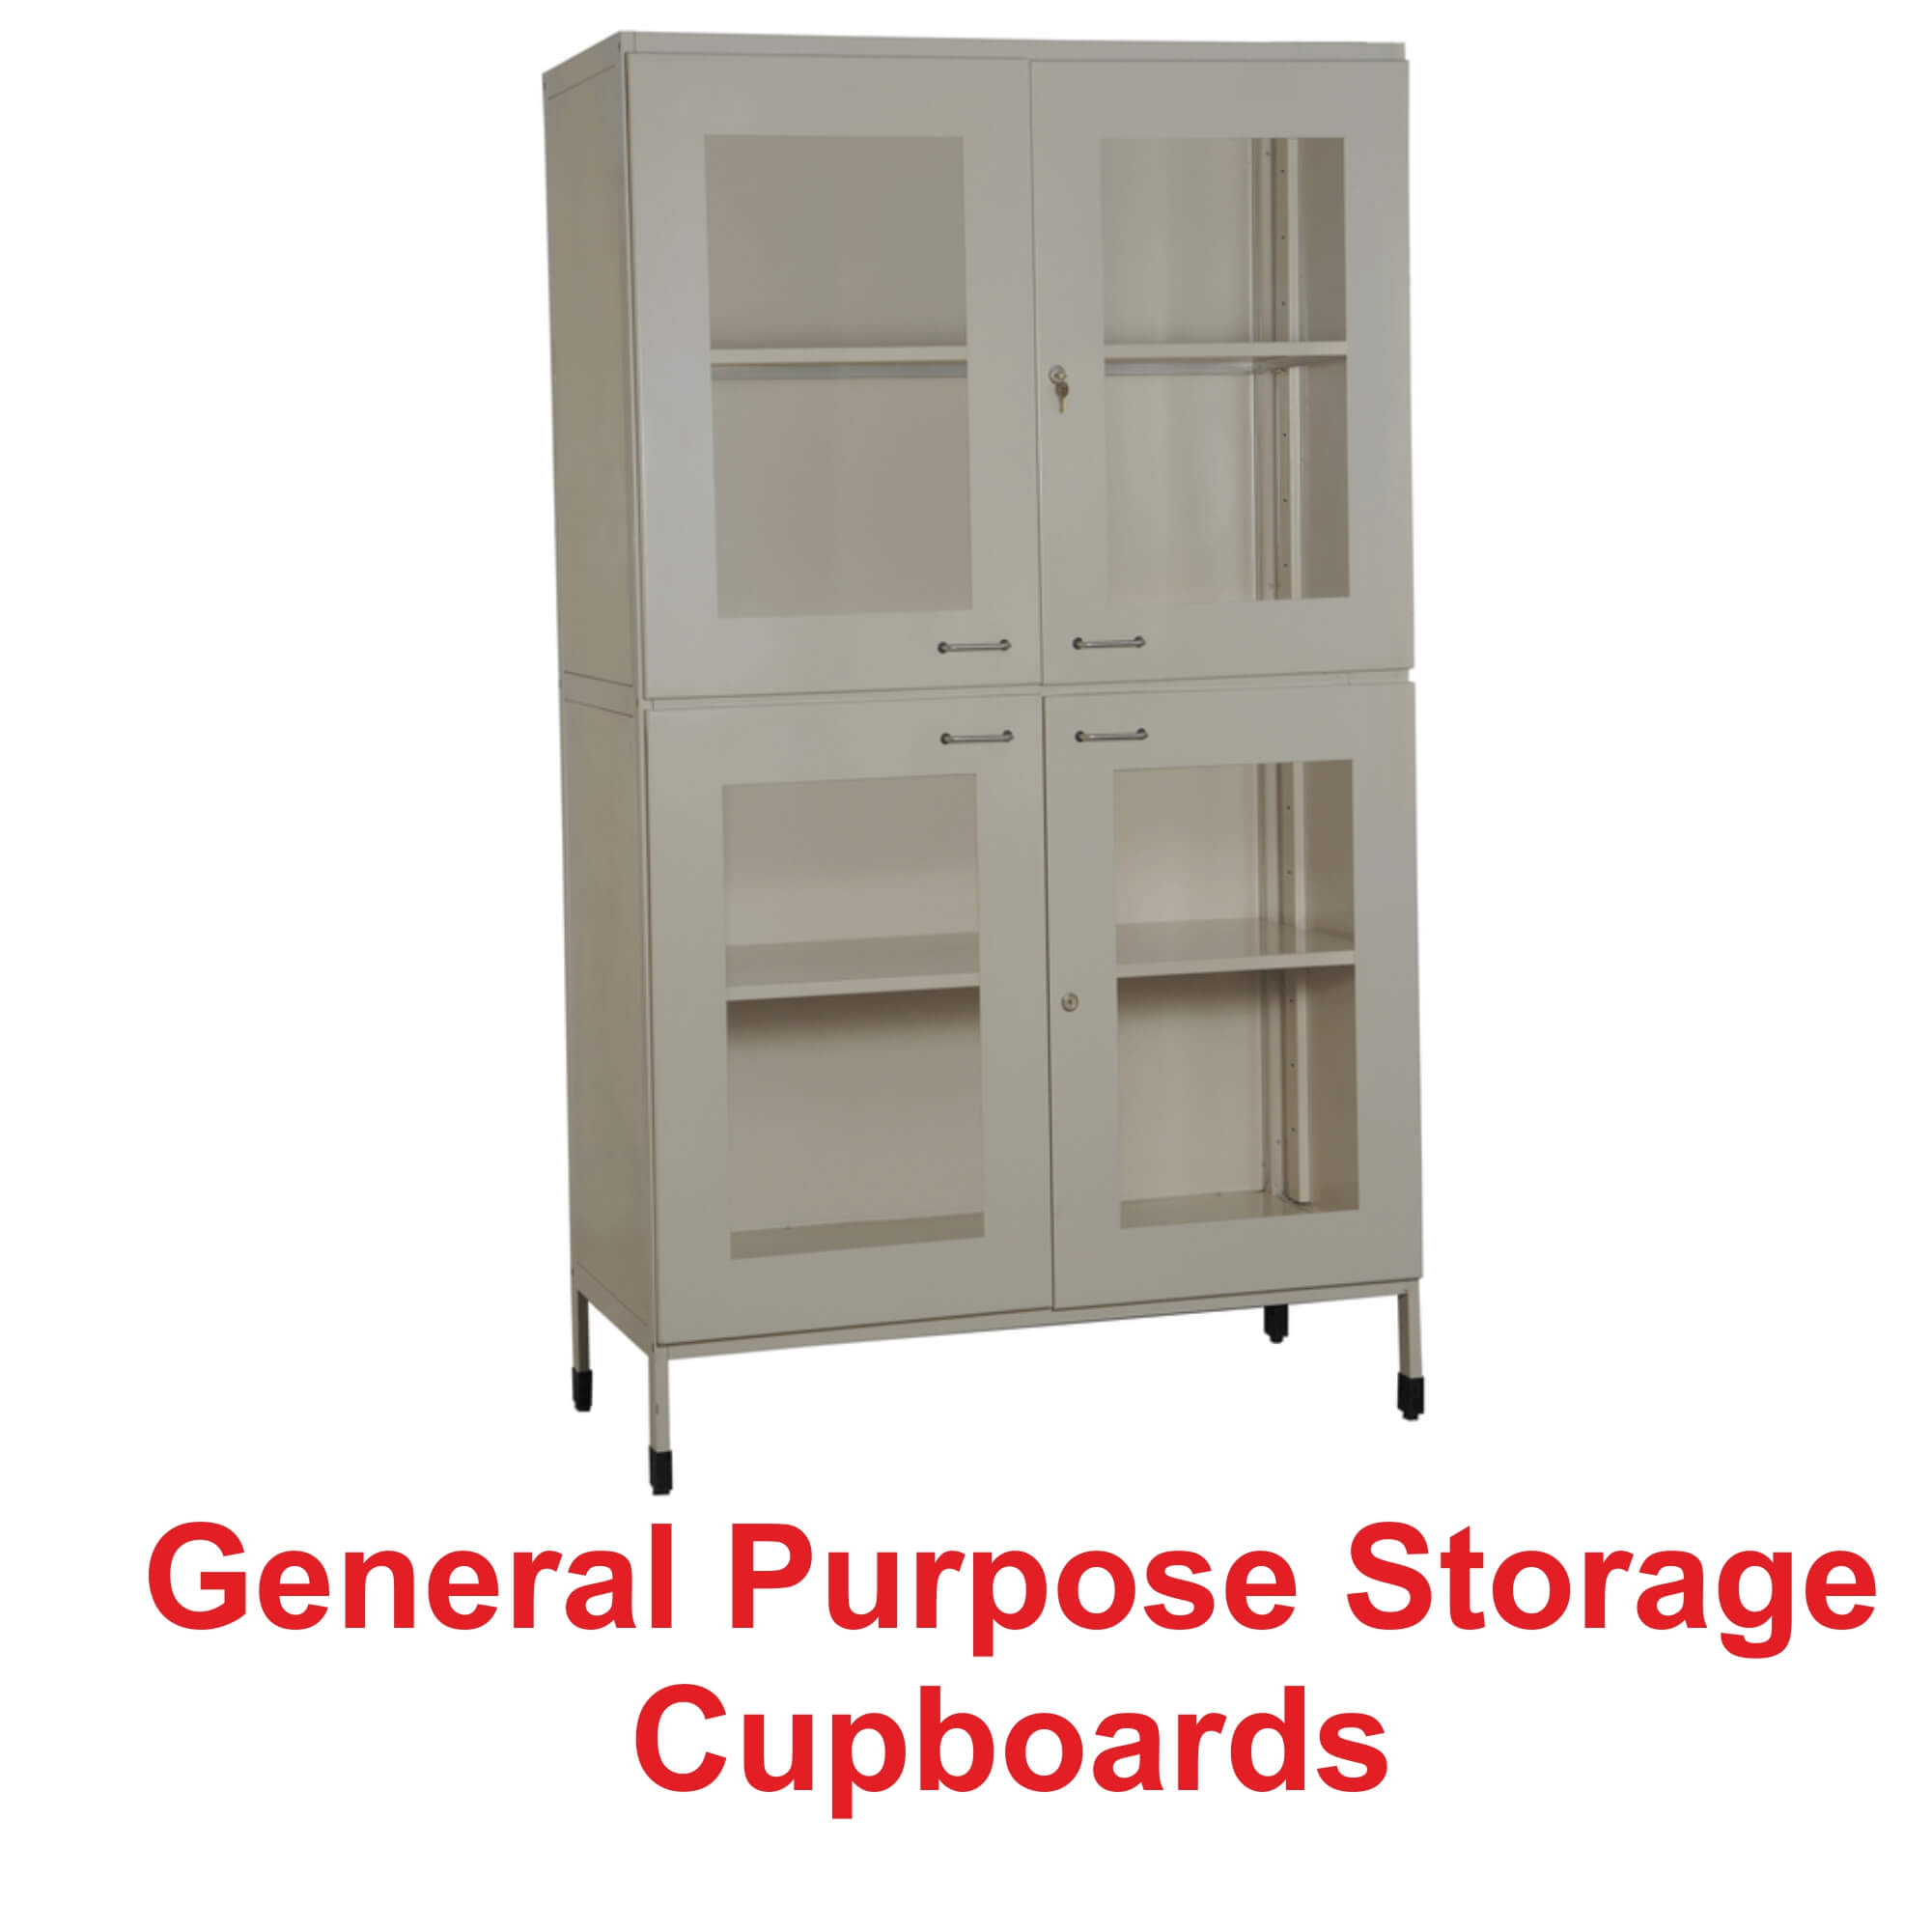 General Purpose Storage Cupboards Manufacturer in India